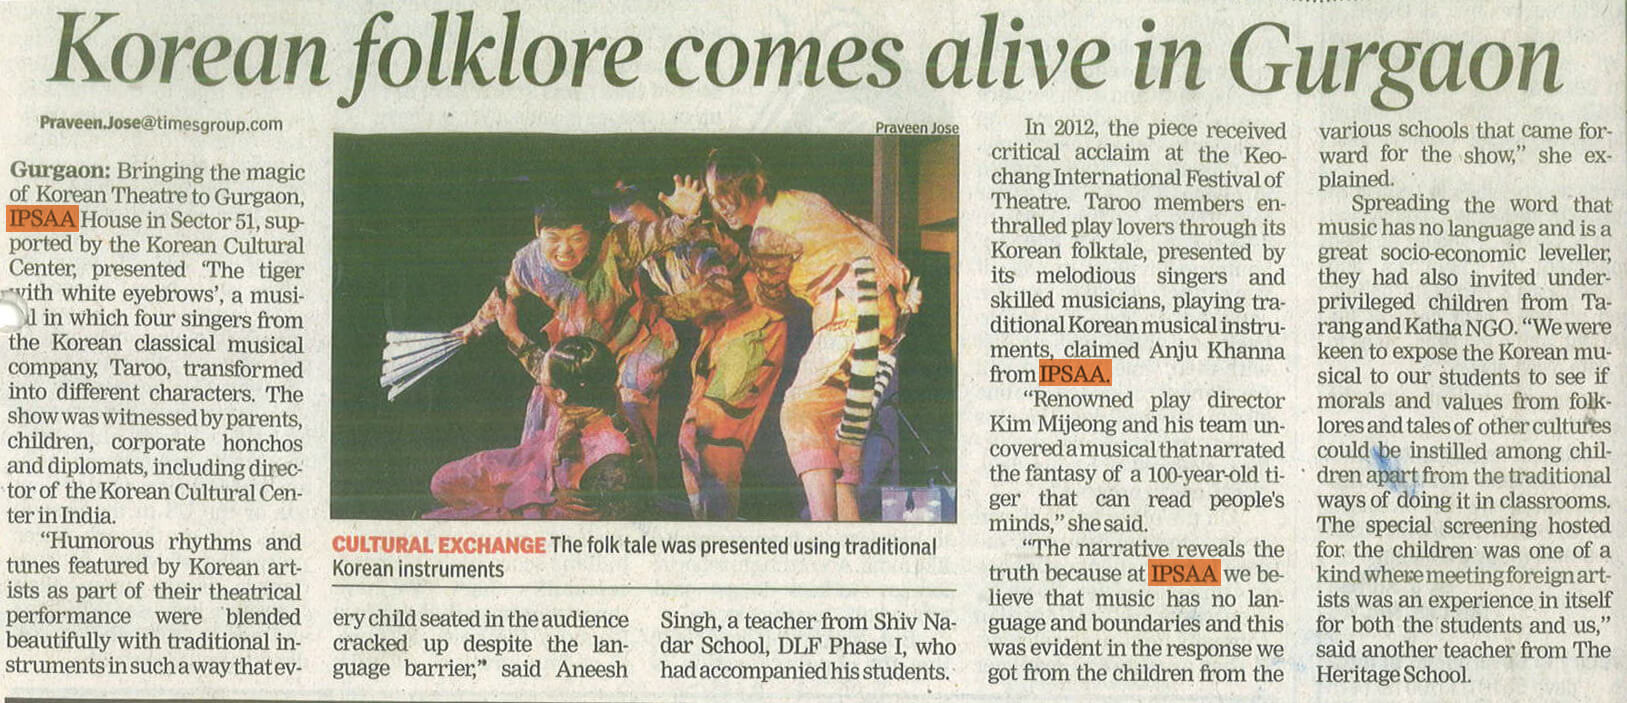 Korean folklore comes alive in Gurgaon